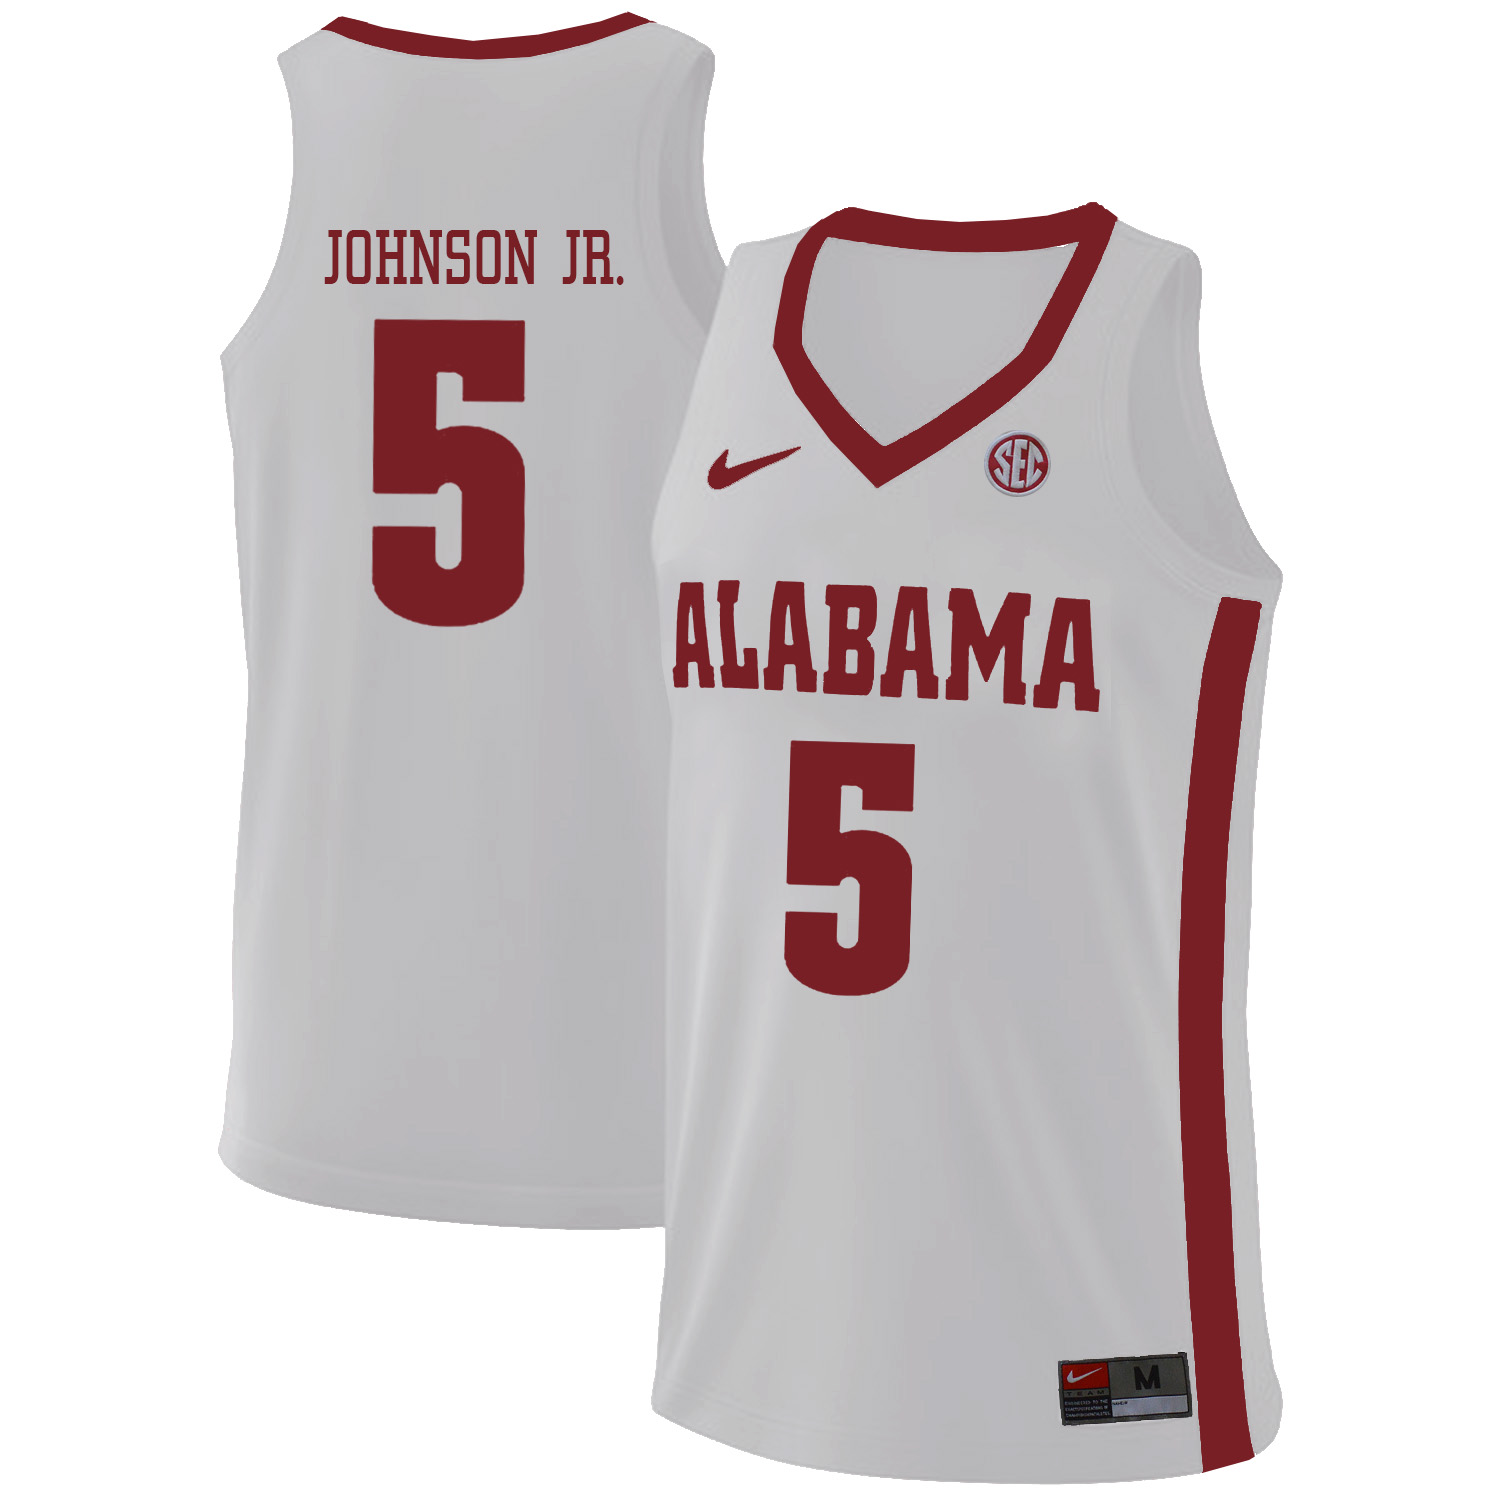 Alabama Crimson Tide 5 Avery Johnson Jr. White College Basketball Jersey